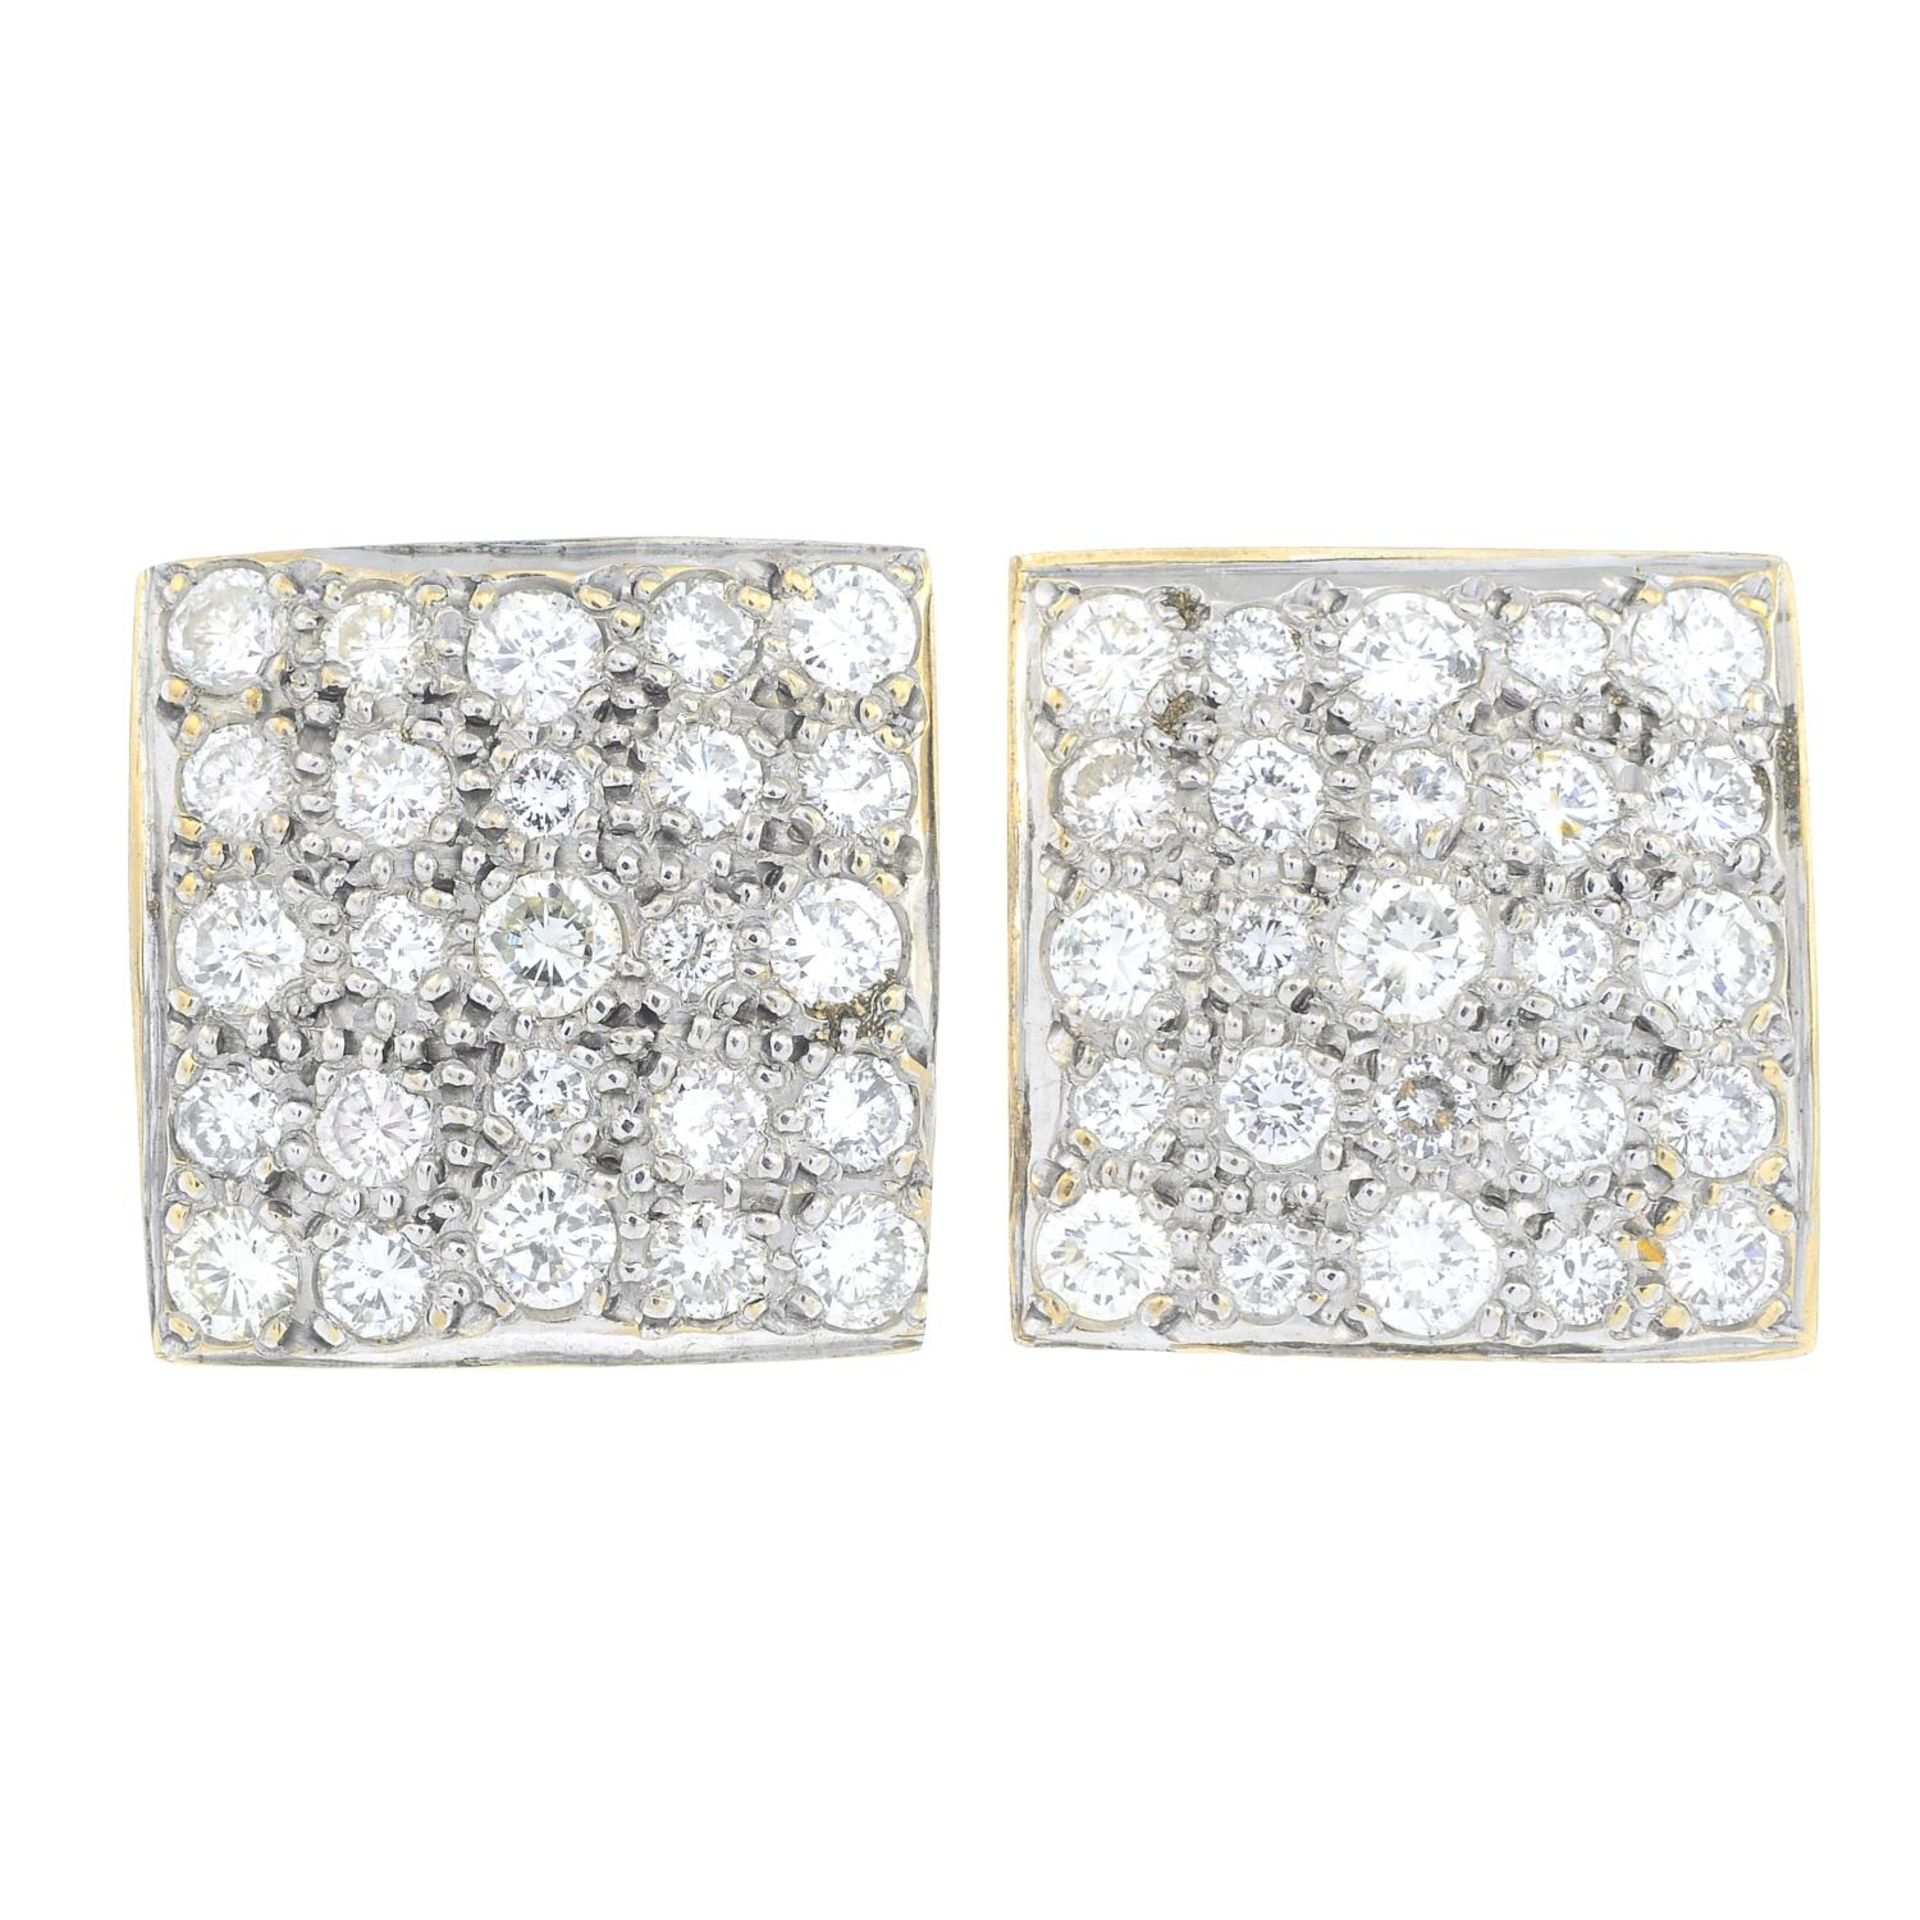 A pair of brilliant-cut diamond cluster stud earrings.